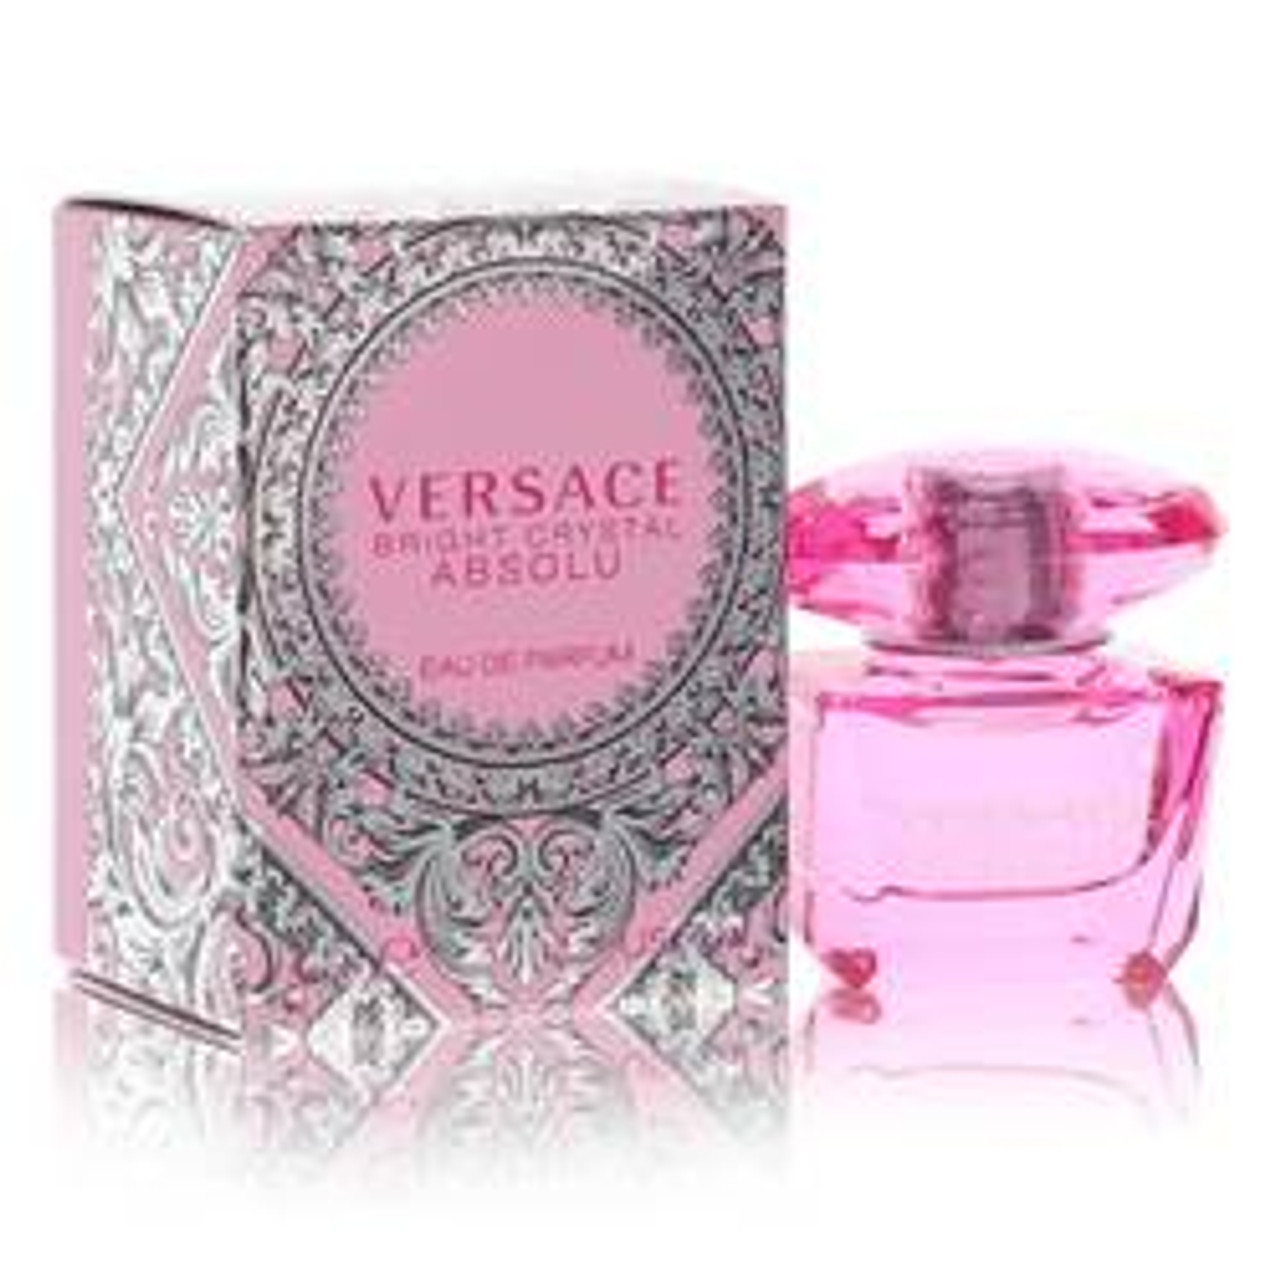 Bright Crystal Absolu Perfume By Versace Mini EDP 0.17 oz for Women - *Pre-Order